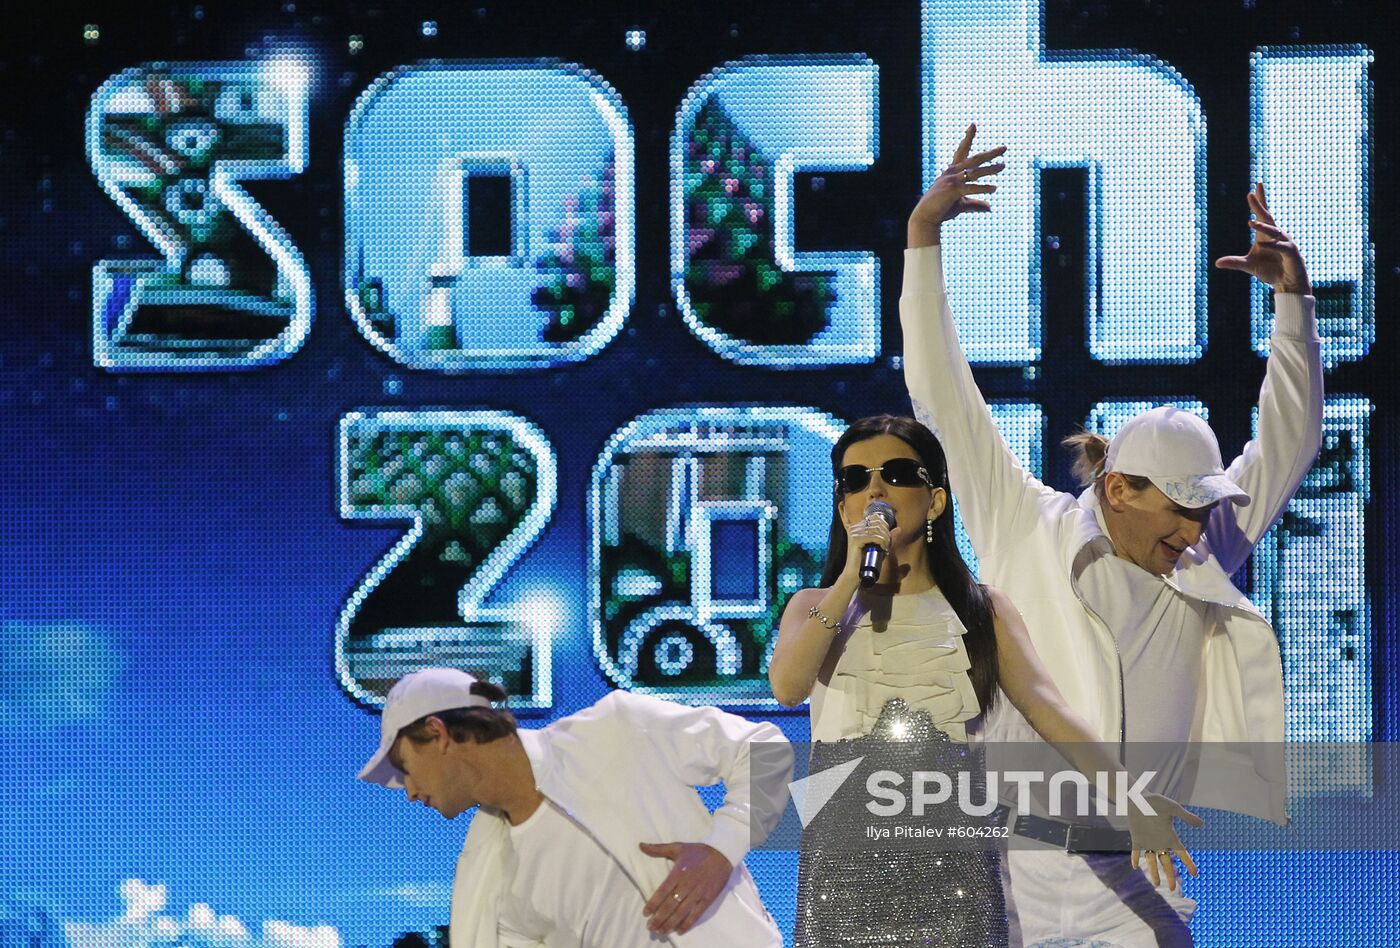 Presentation of Sochi-2014